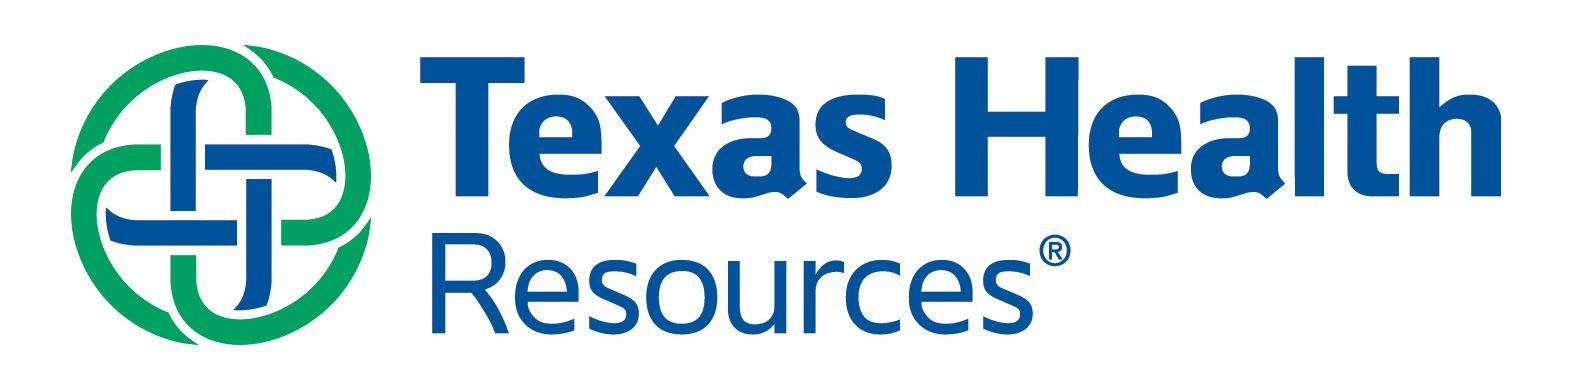 UTSW Logo - UT Southwestern - Texas Health Resources Cardiovascular Symposium ...